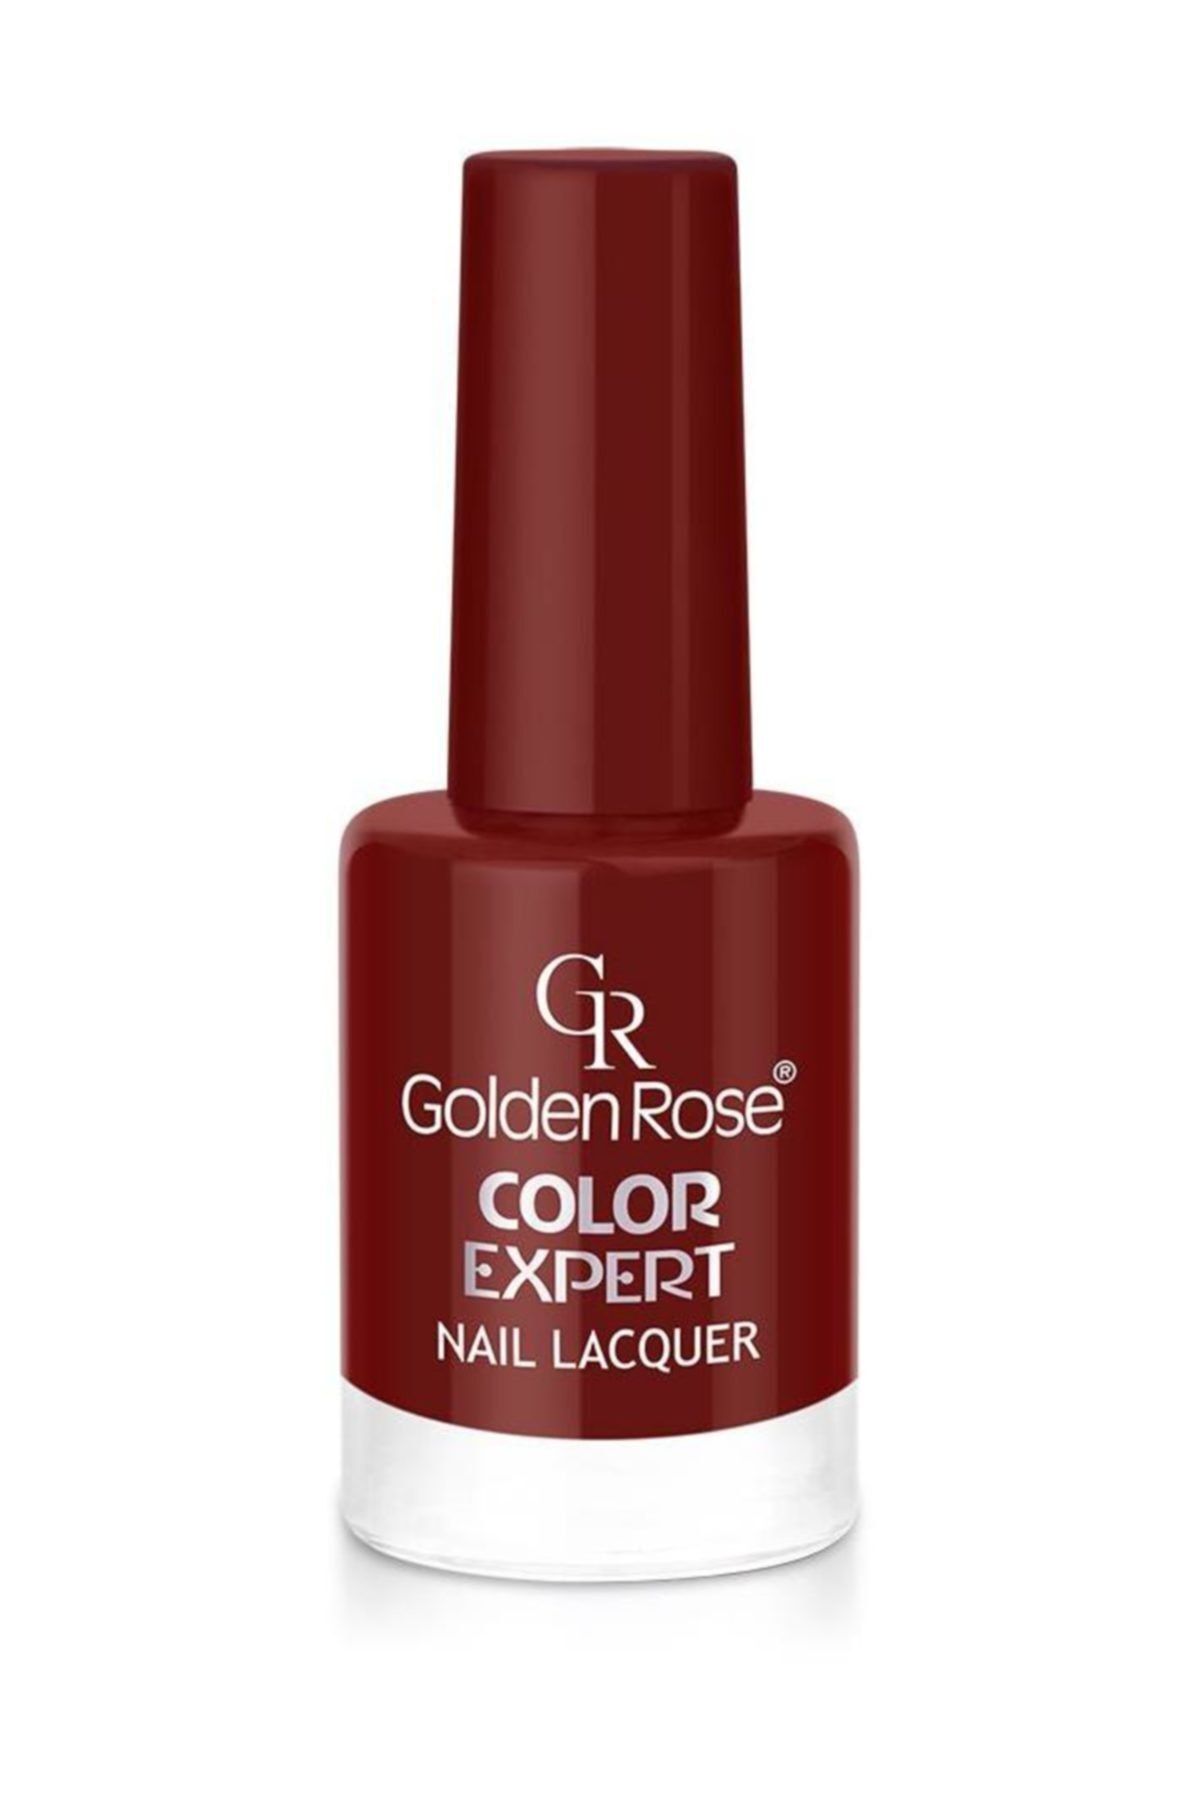 Golden Rose Oje - Color Expert Nail Lacquer No: 35 8691190703356